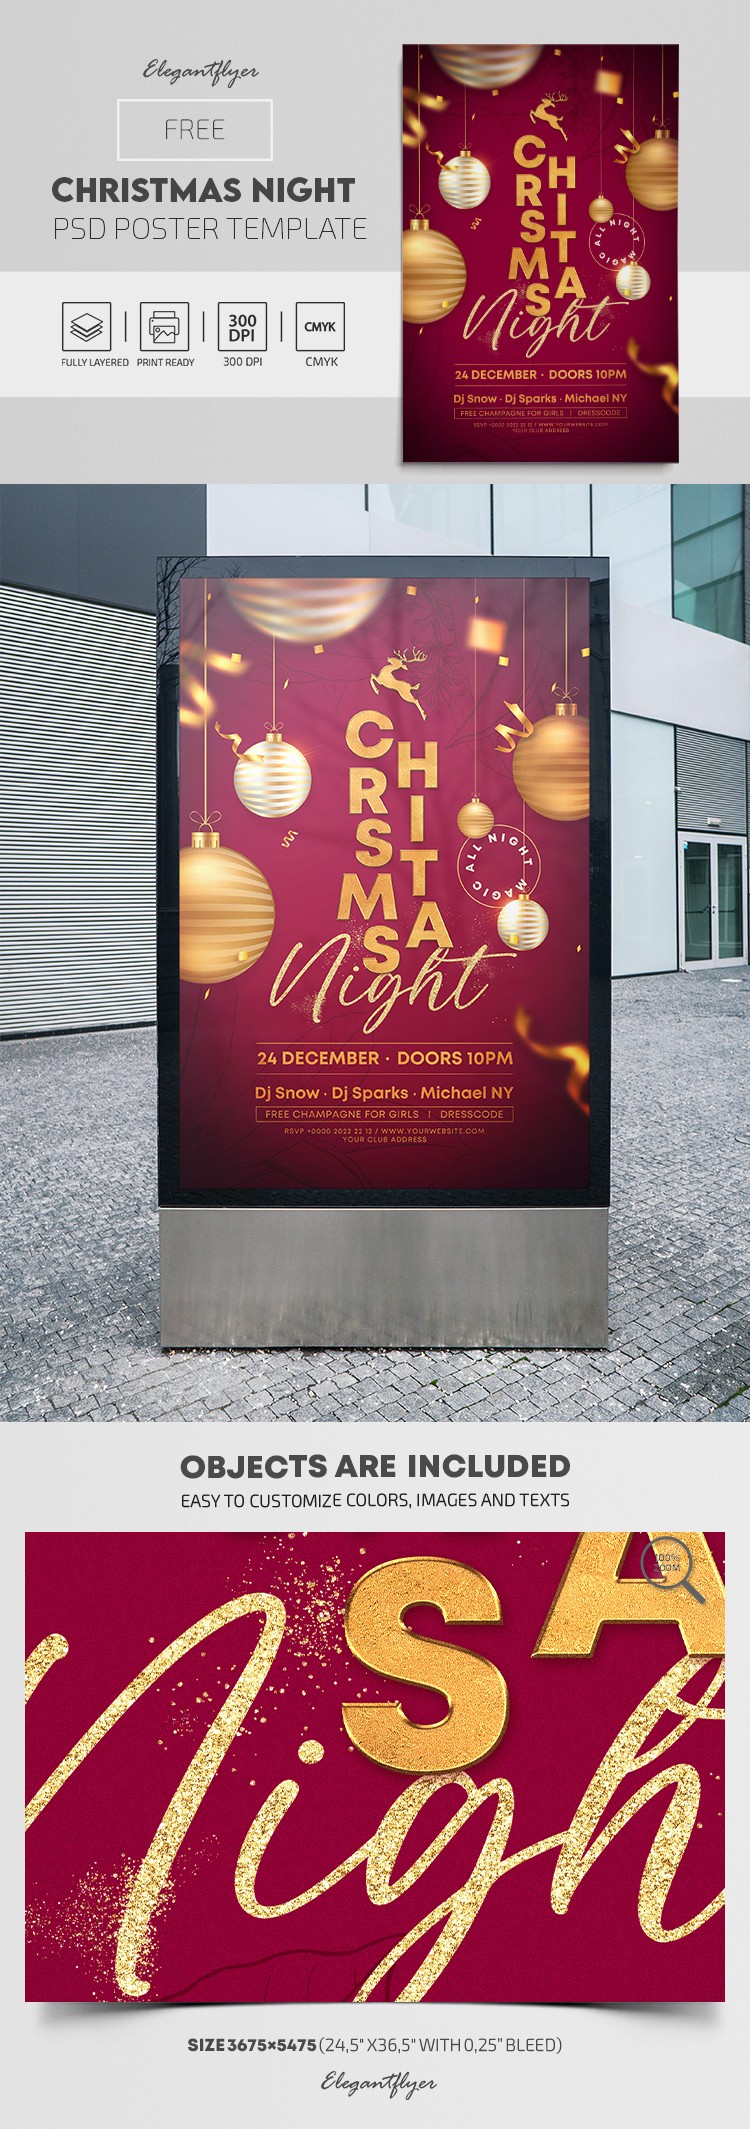 Christmas Night Poster by ElegantFlyer